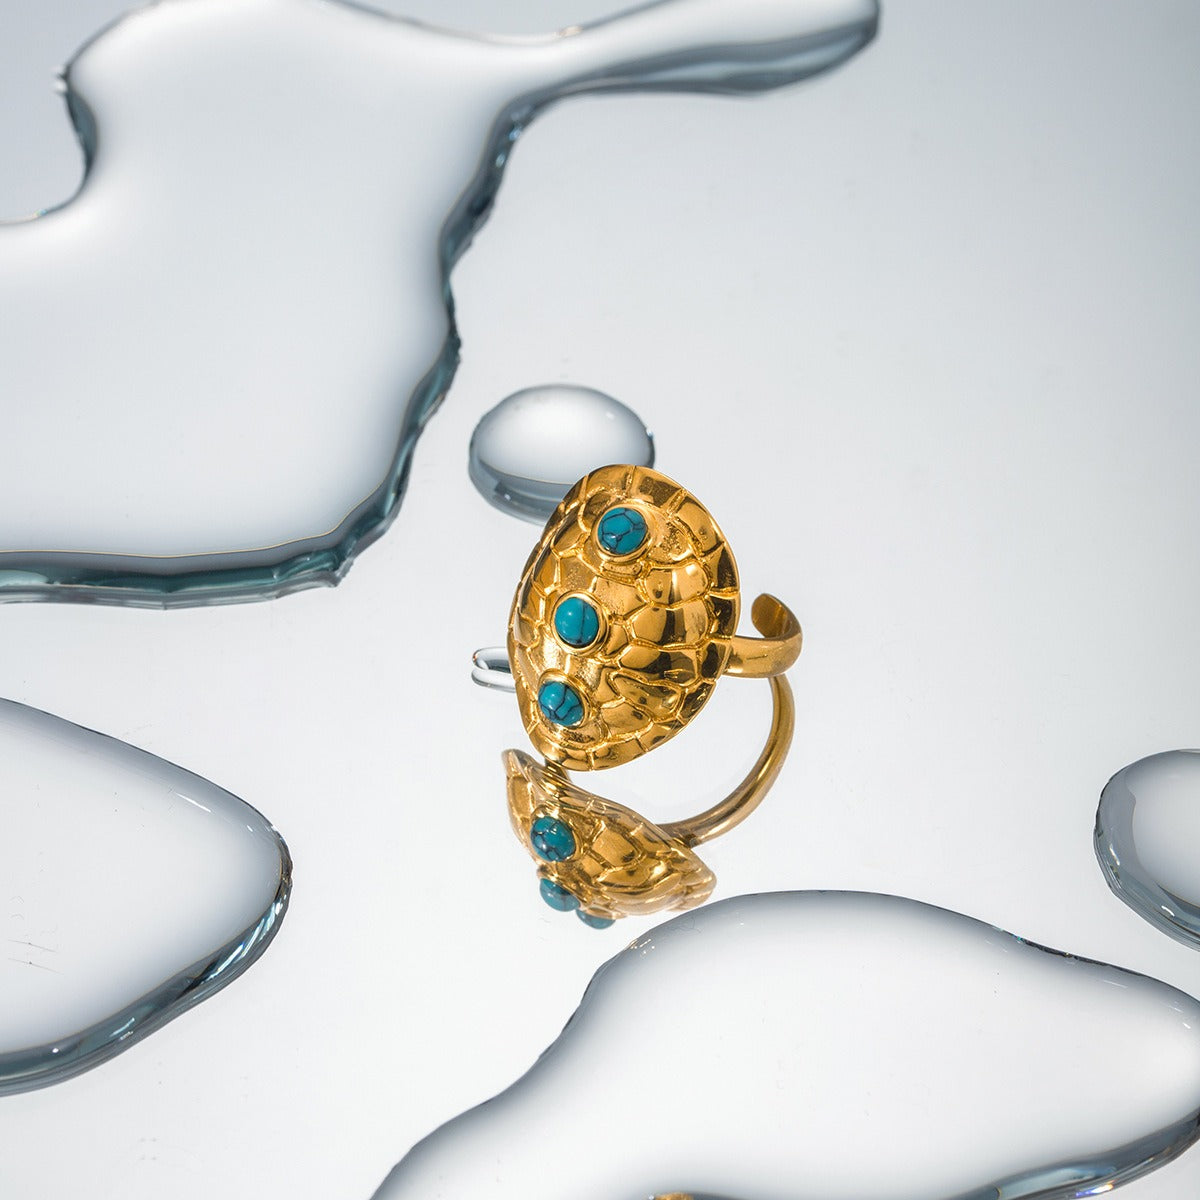 18k gold noble and elegant tortoise shell inlaid turquoise design open ring - SAOROPHO